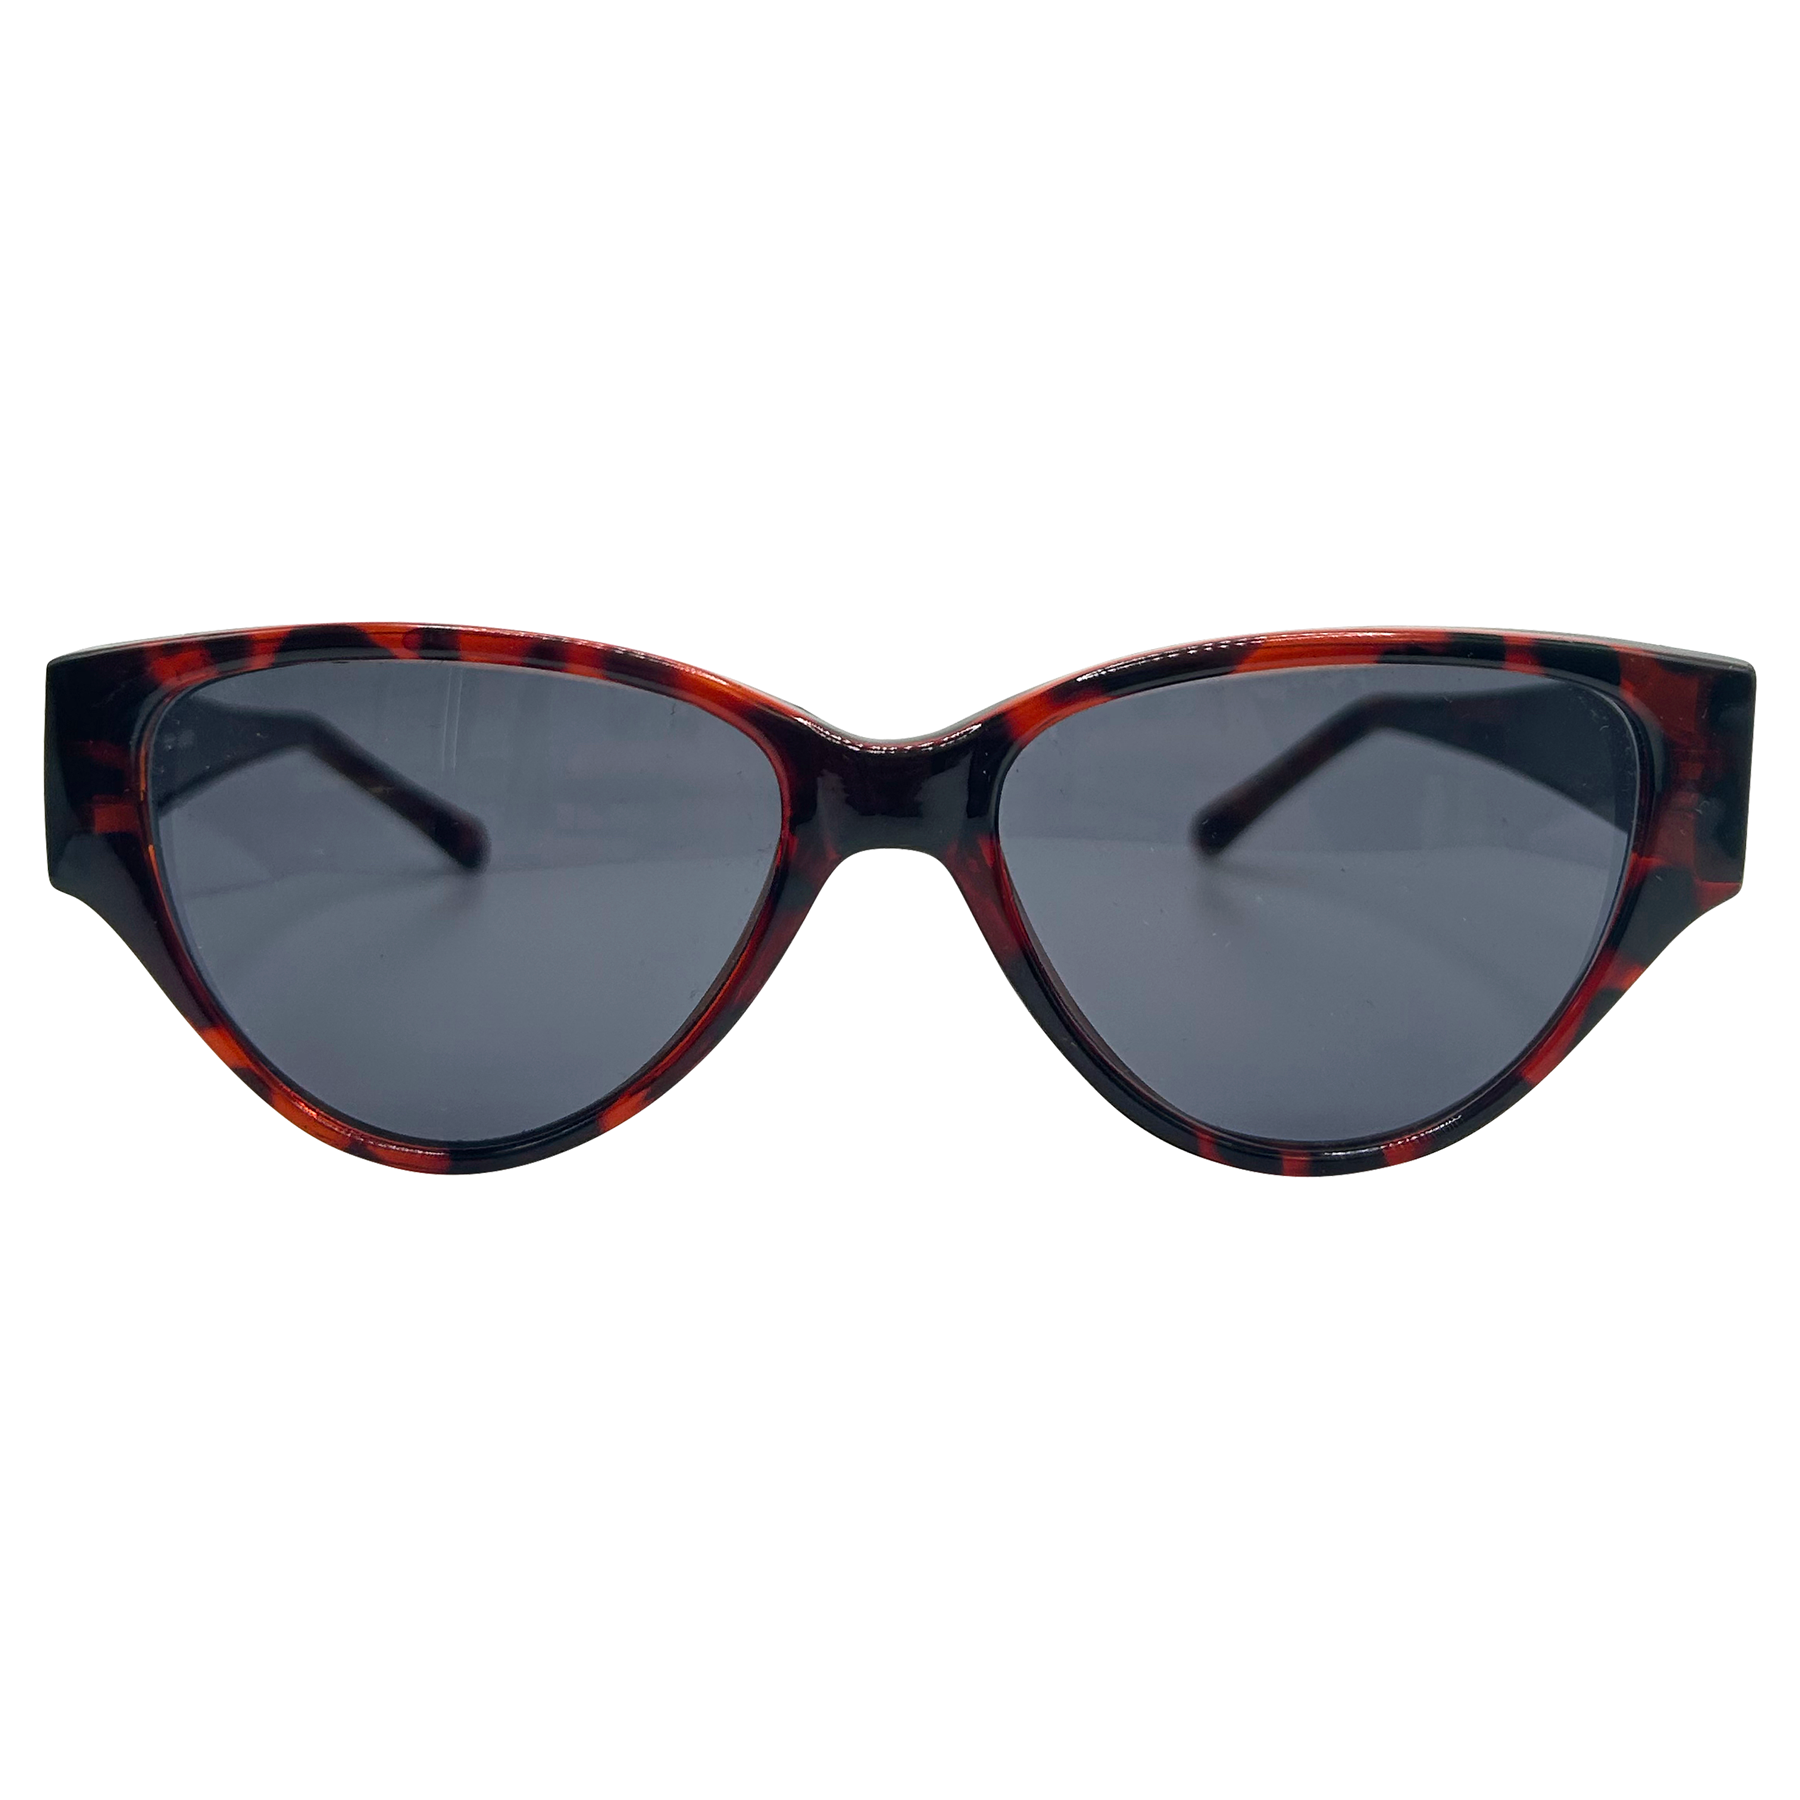 HILDY Tortoise/Super Dark Cat-Eye Sunglasses